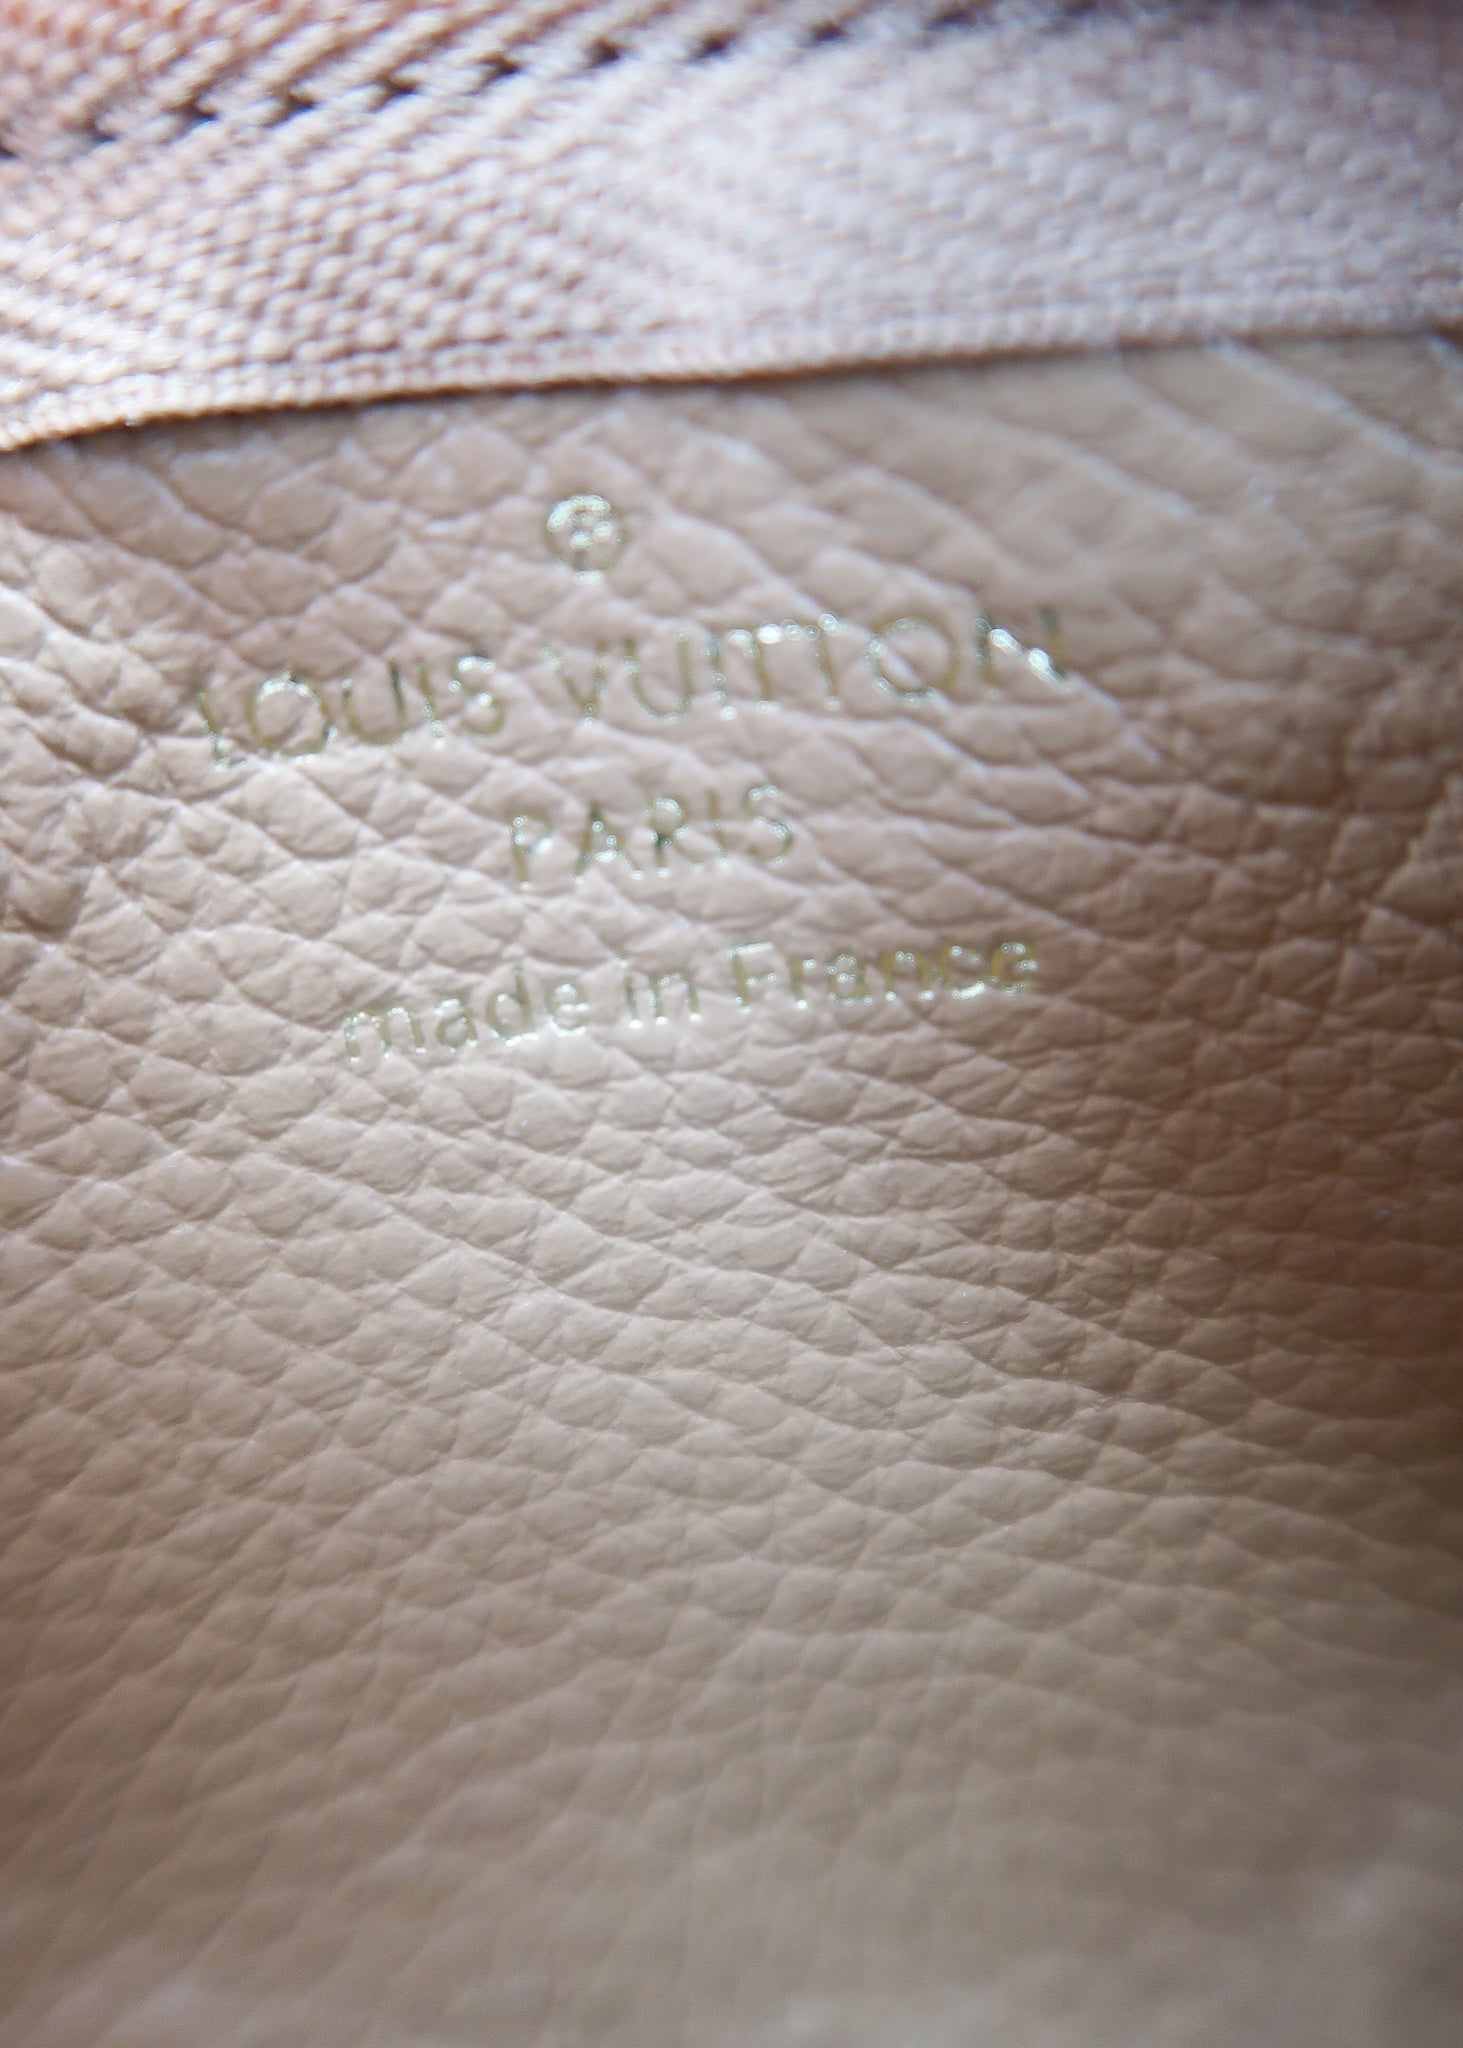 Genuine Louis Vuitton retired/rare Empreinte cles Key Pouch Rose